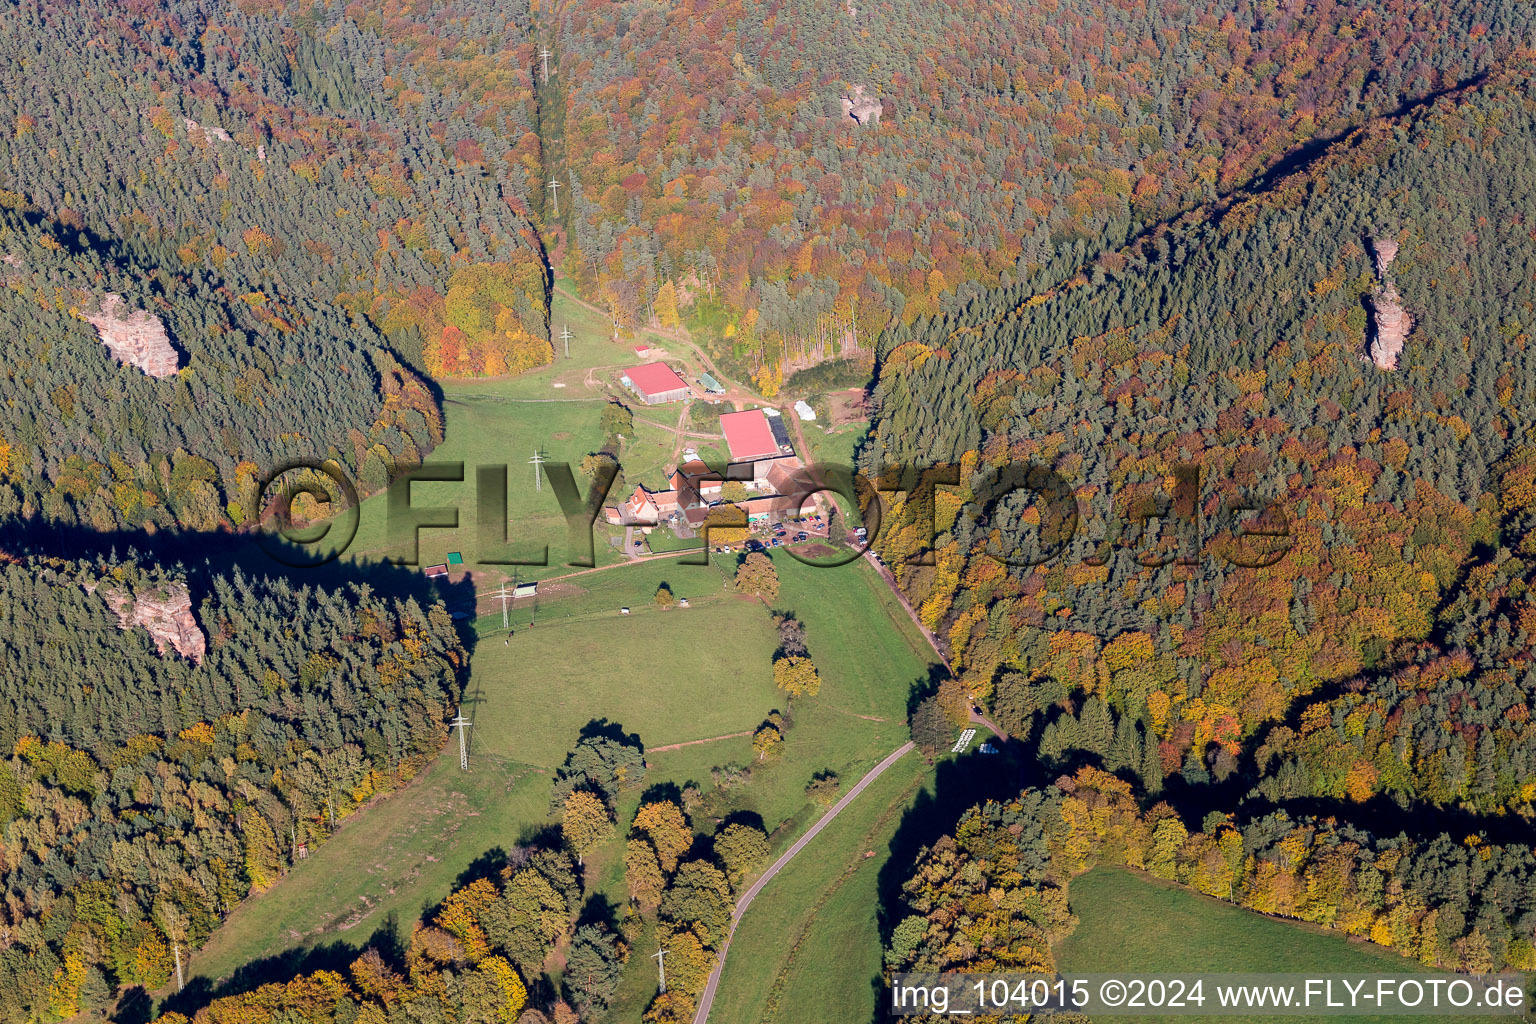 Aerial view of Bärenbrunnerhof in Busenberg in the state Rhineland-Palatinate, Germany